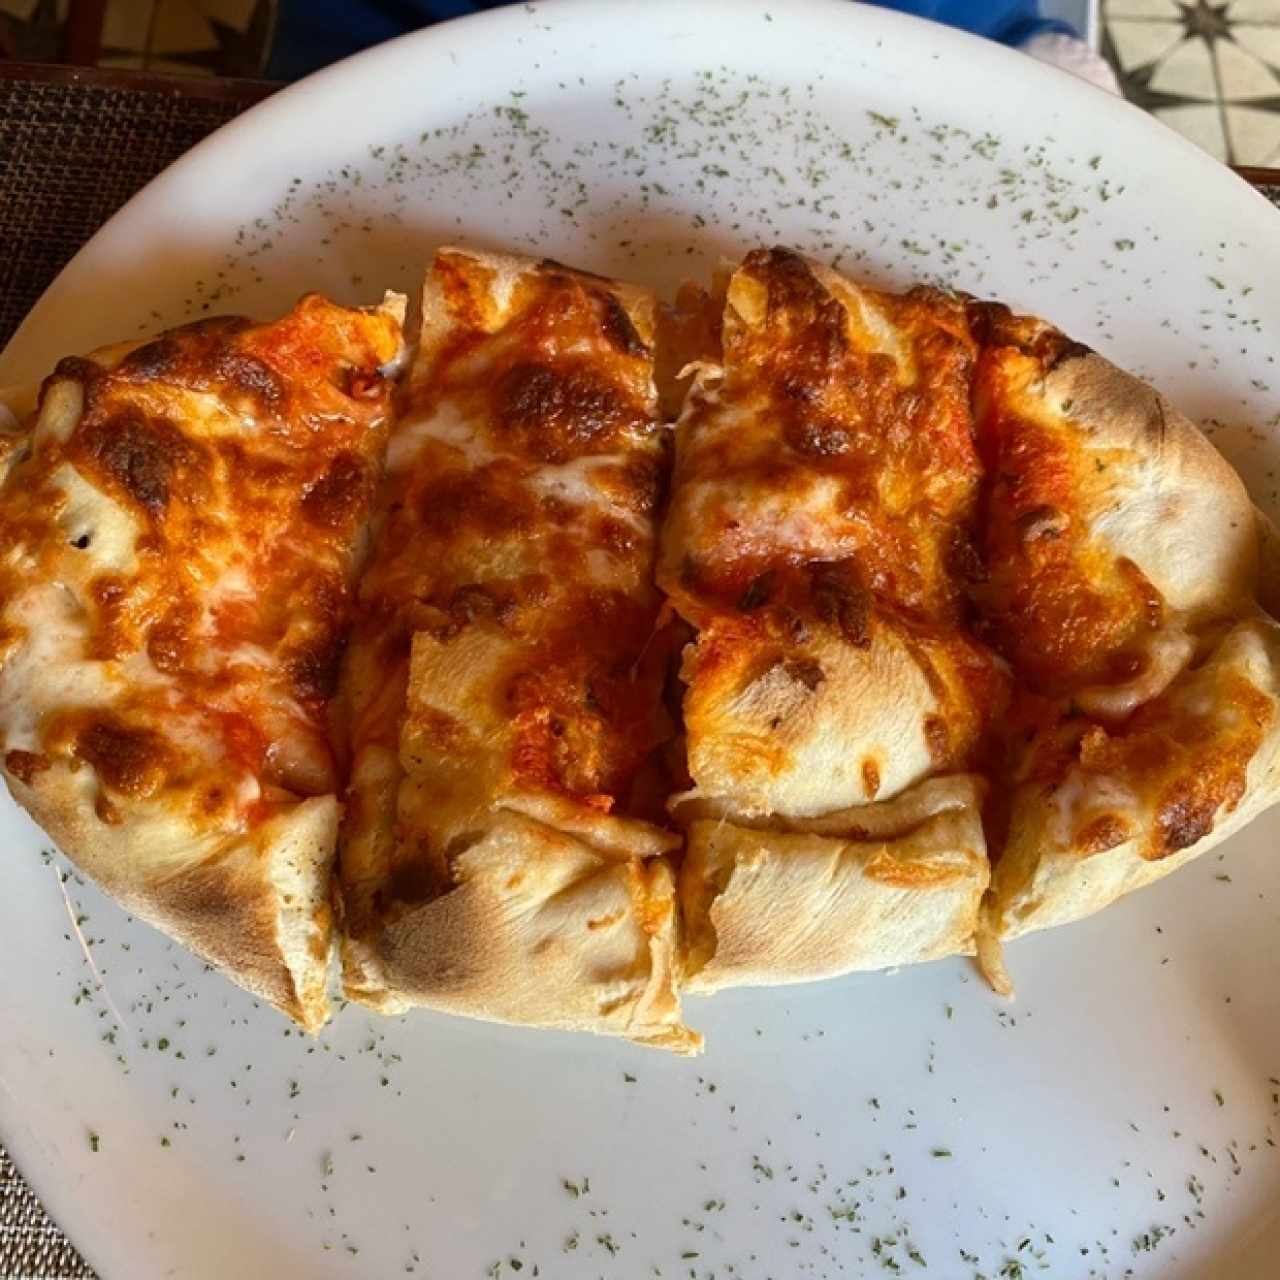 Pizza calzone